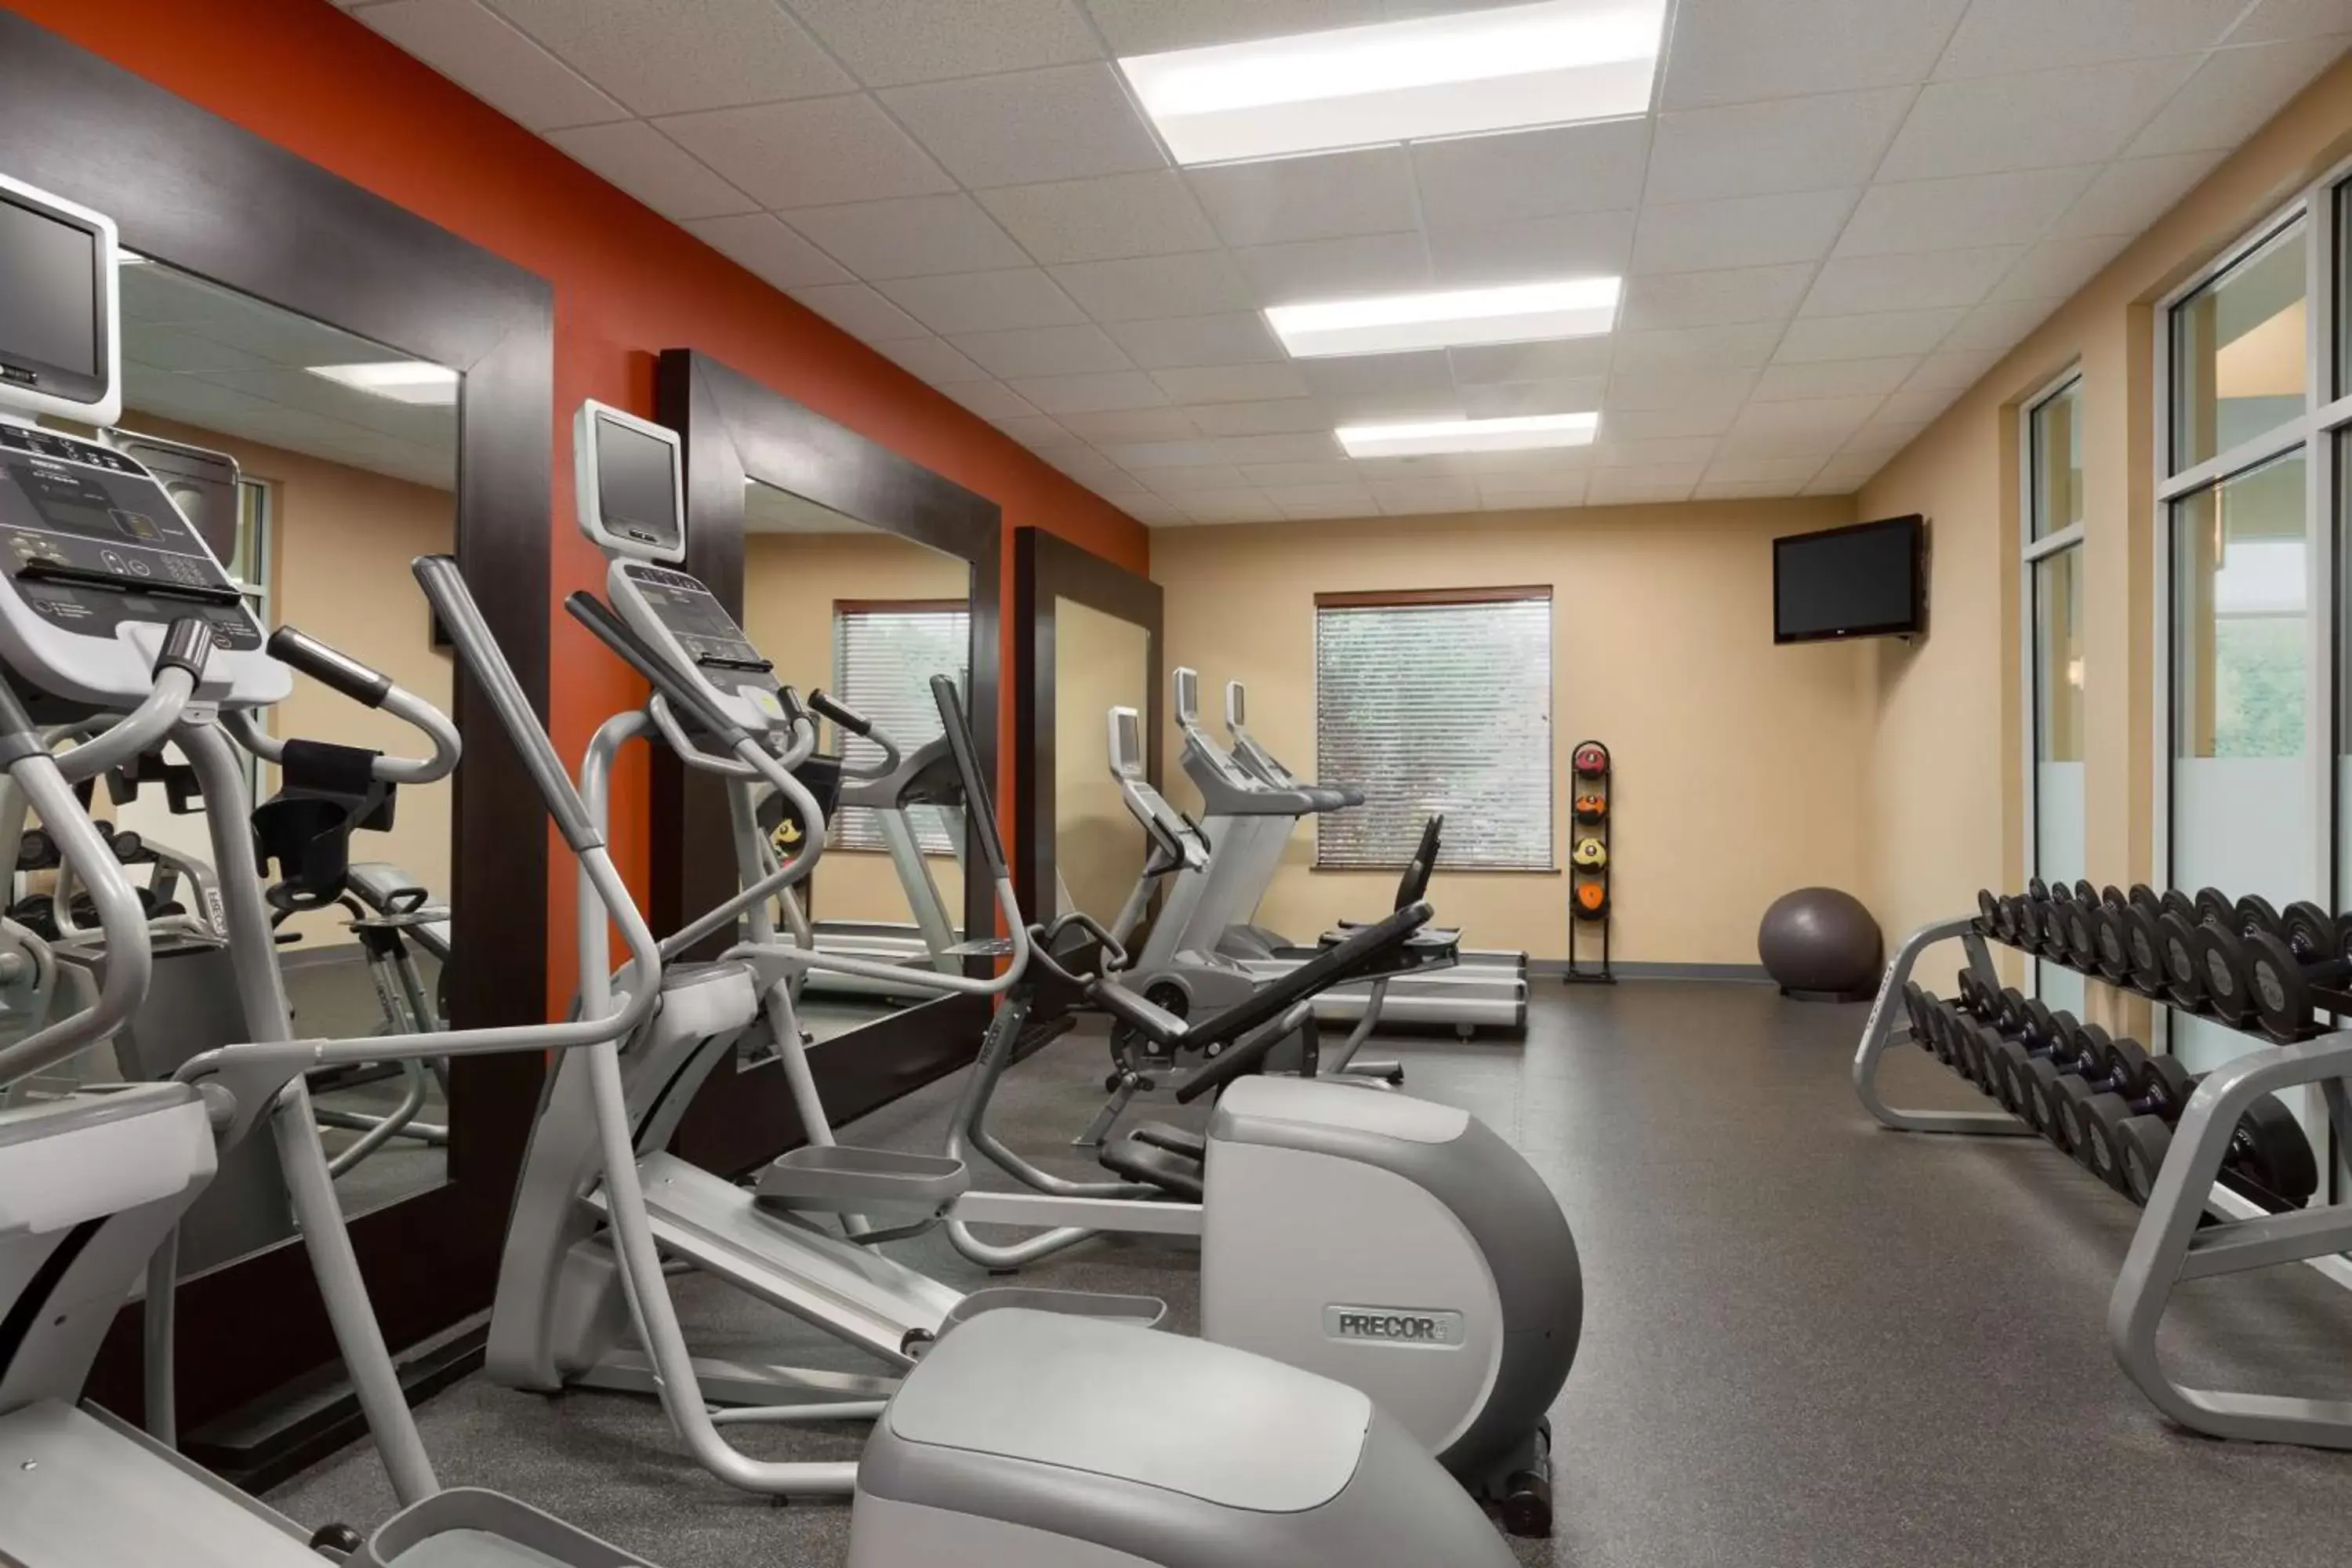 Fitness centre/facilities, Fitness Center/Facilities in Hilton Garden Inn Abilene